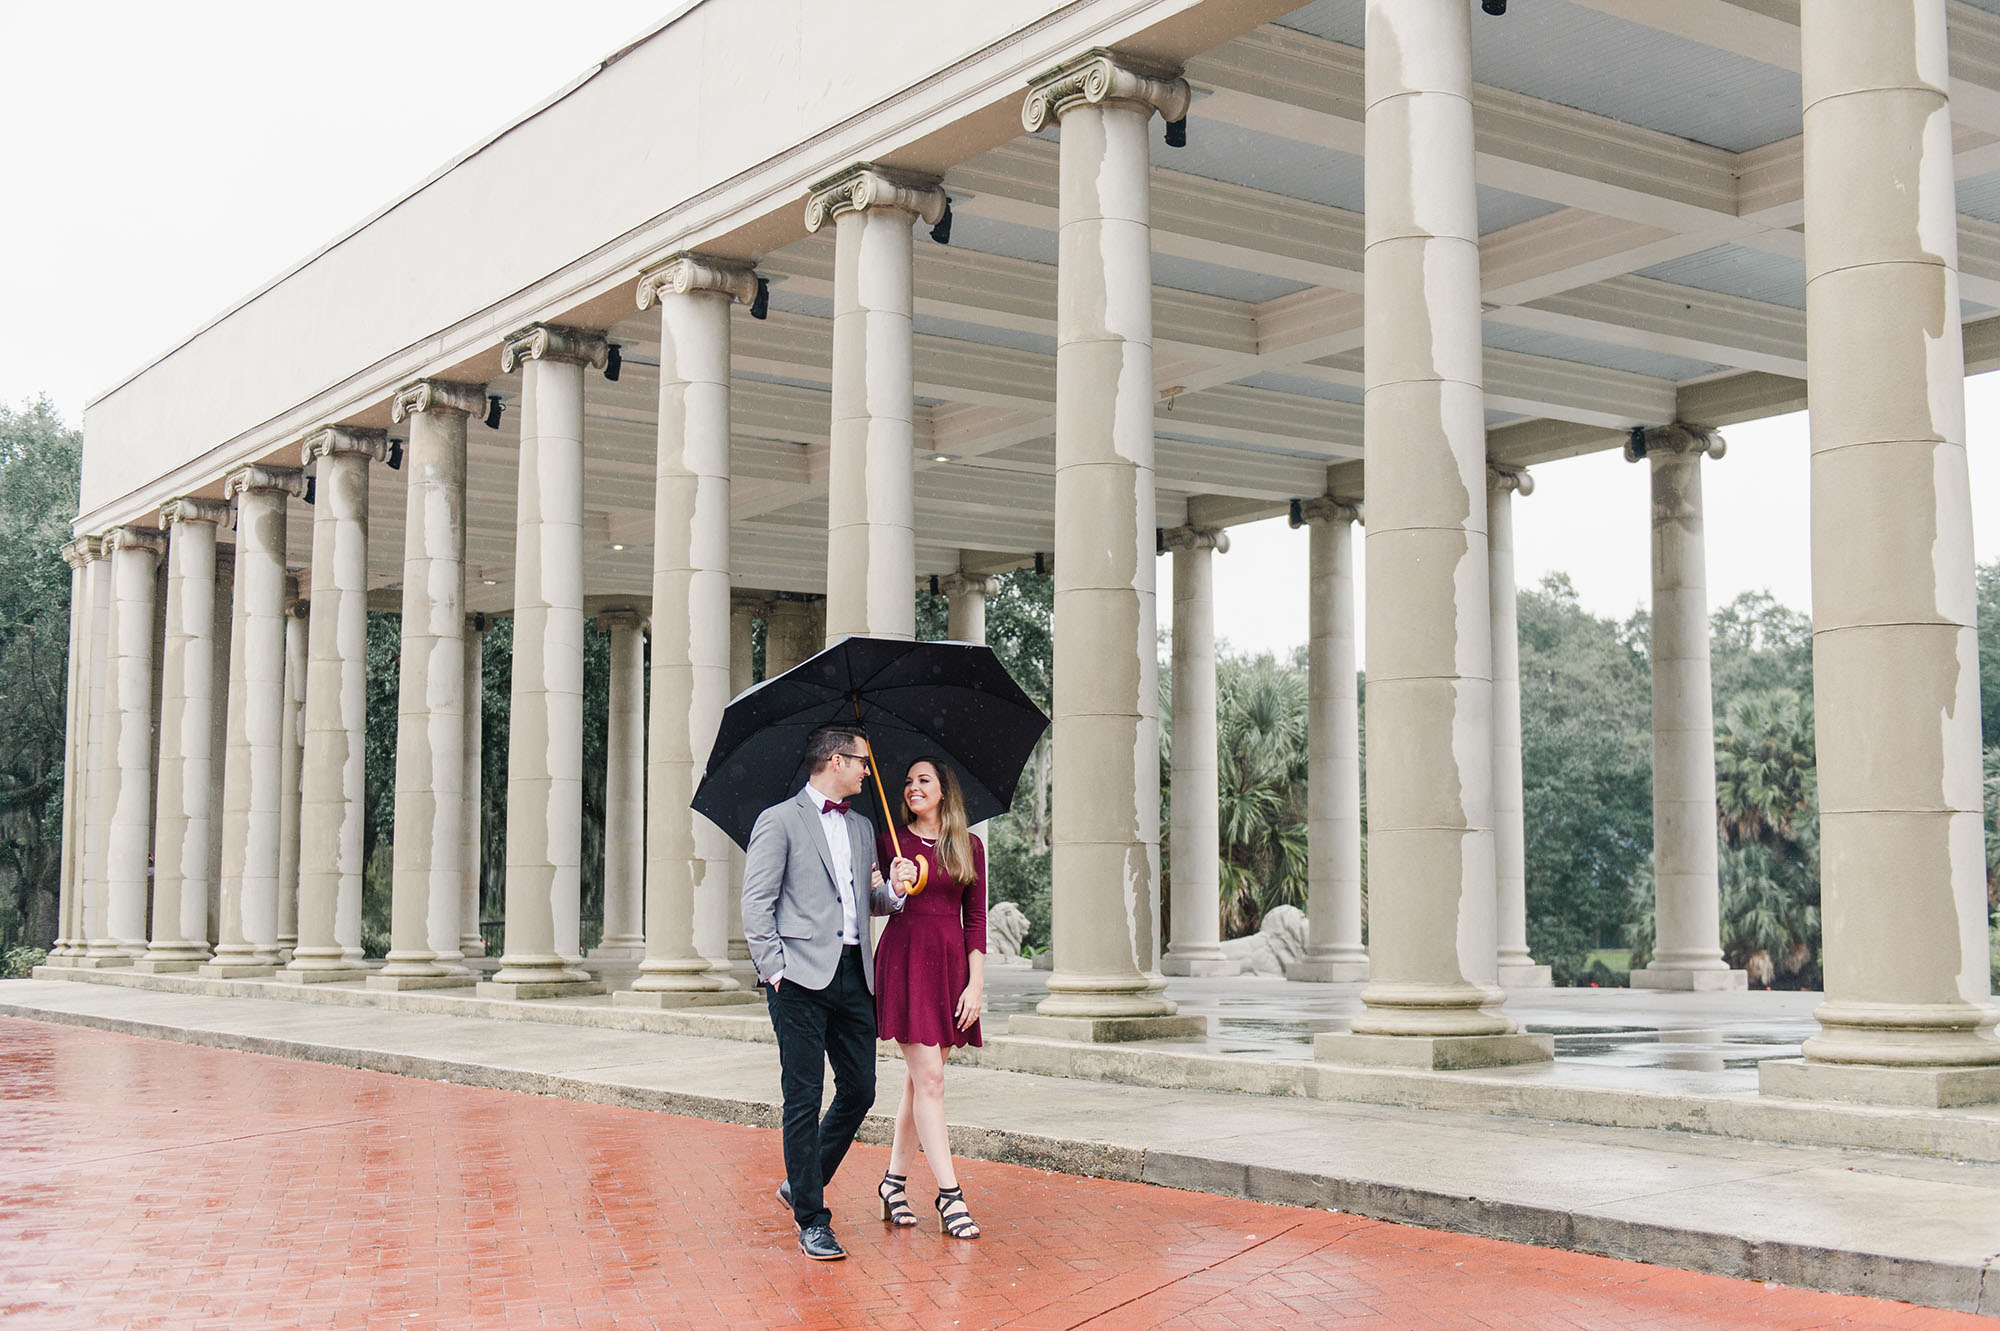 Couple with umbrella in rain